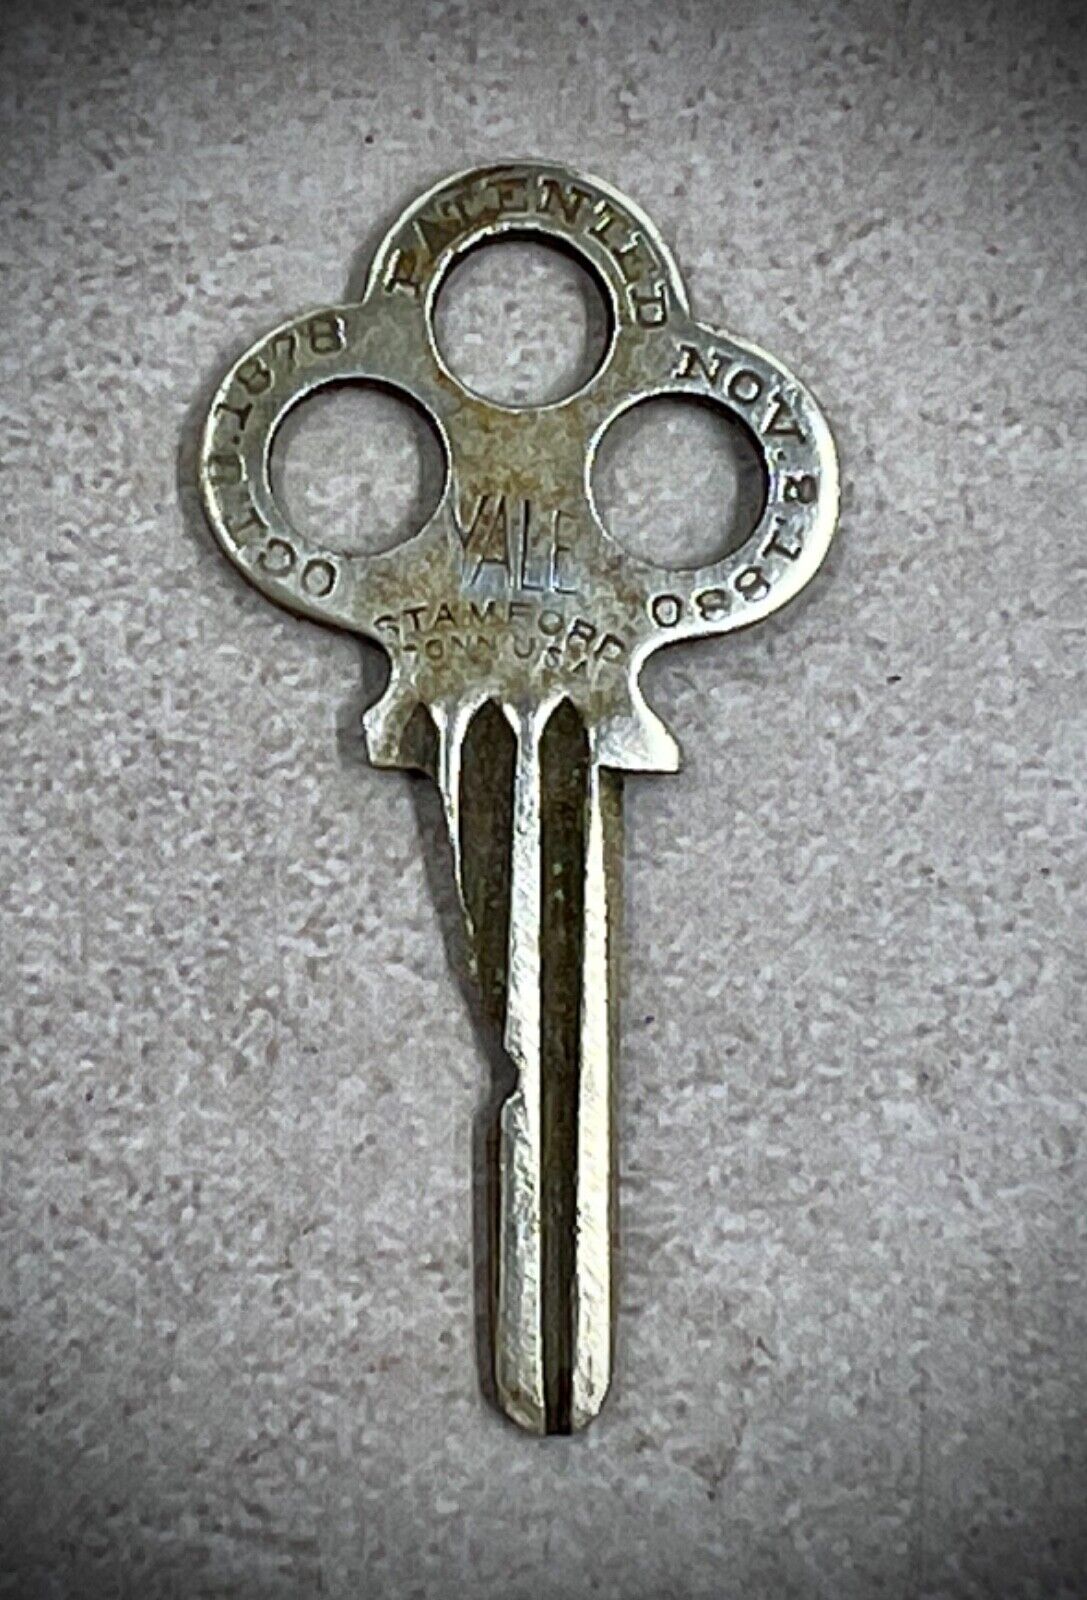 Vintage Antique Yale Stamford Conn. Patented Oct 1878 Nov 1880 Brass Key #1314